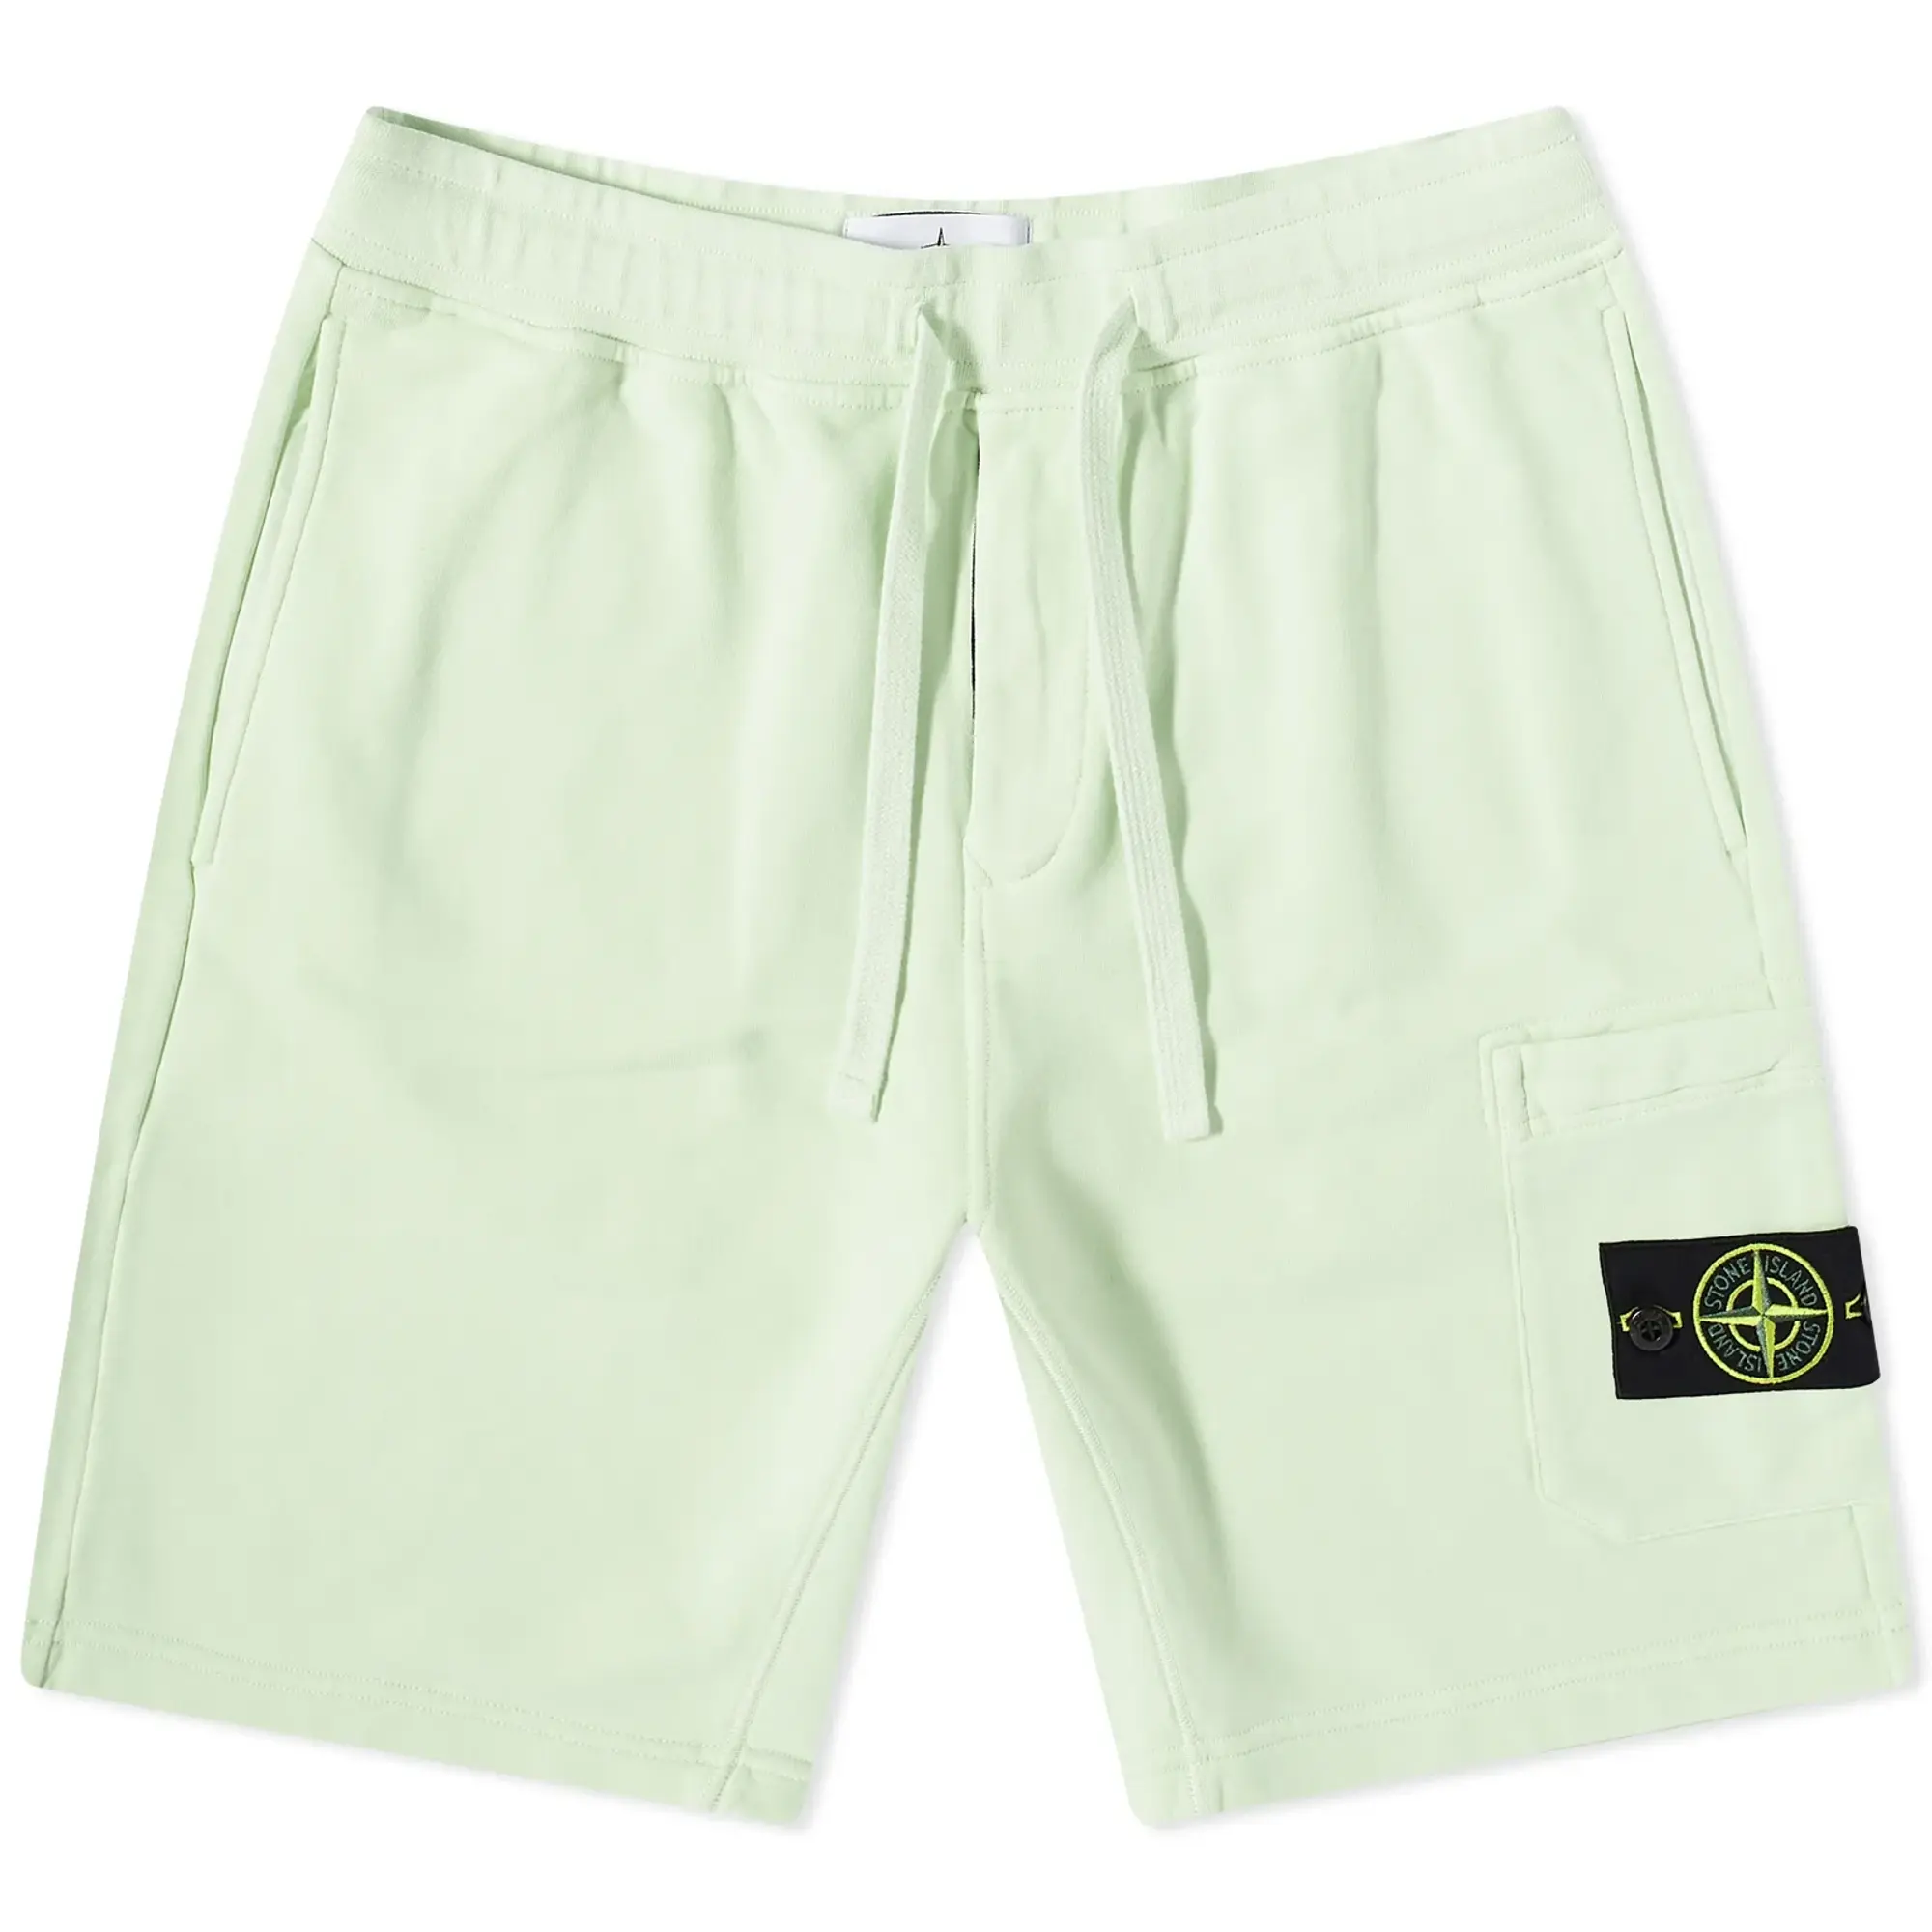 Stone Island Men's Garment Dyed Sweat Shorts Light Green